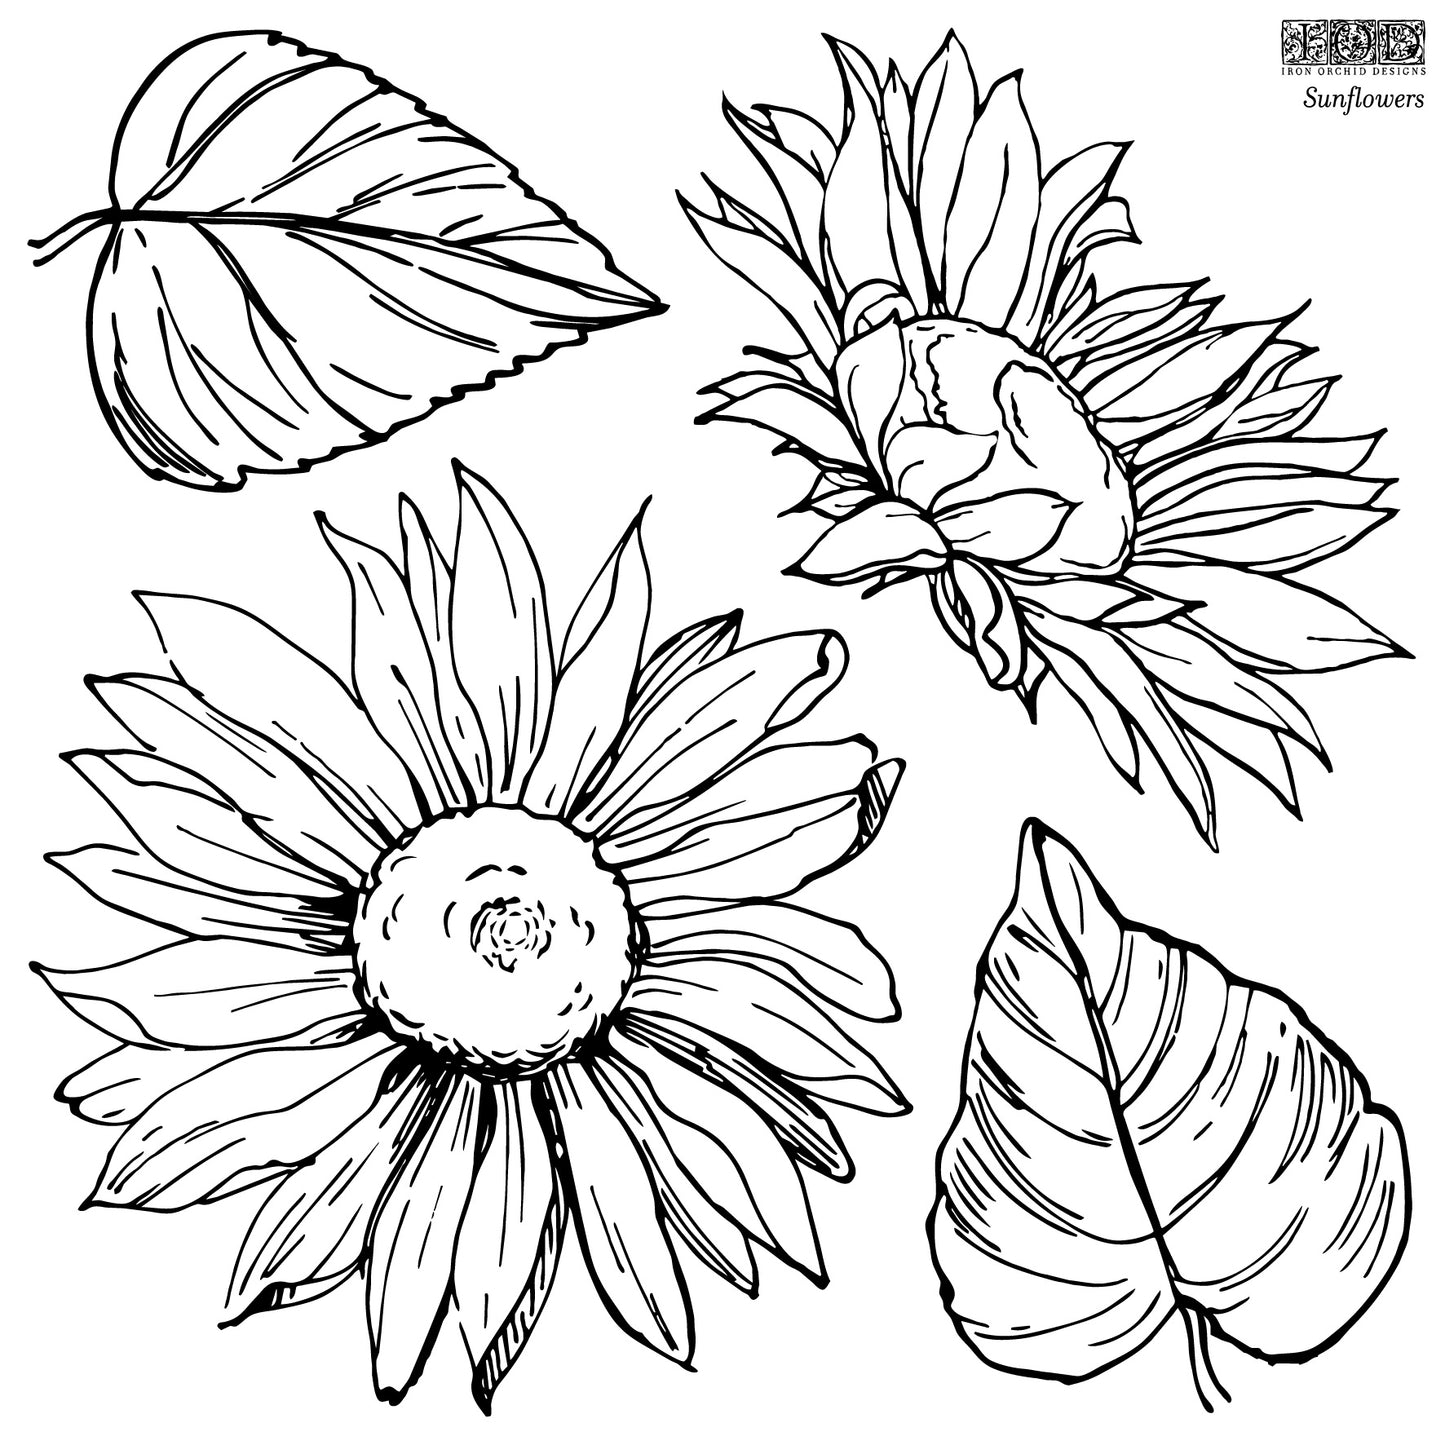 IOD - 2 piece stamp set Sunflowers